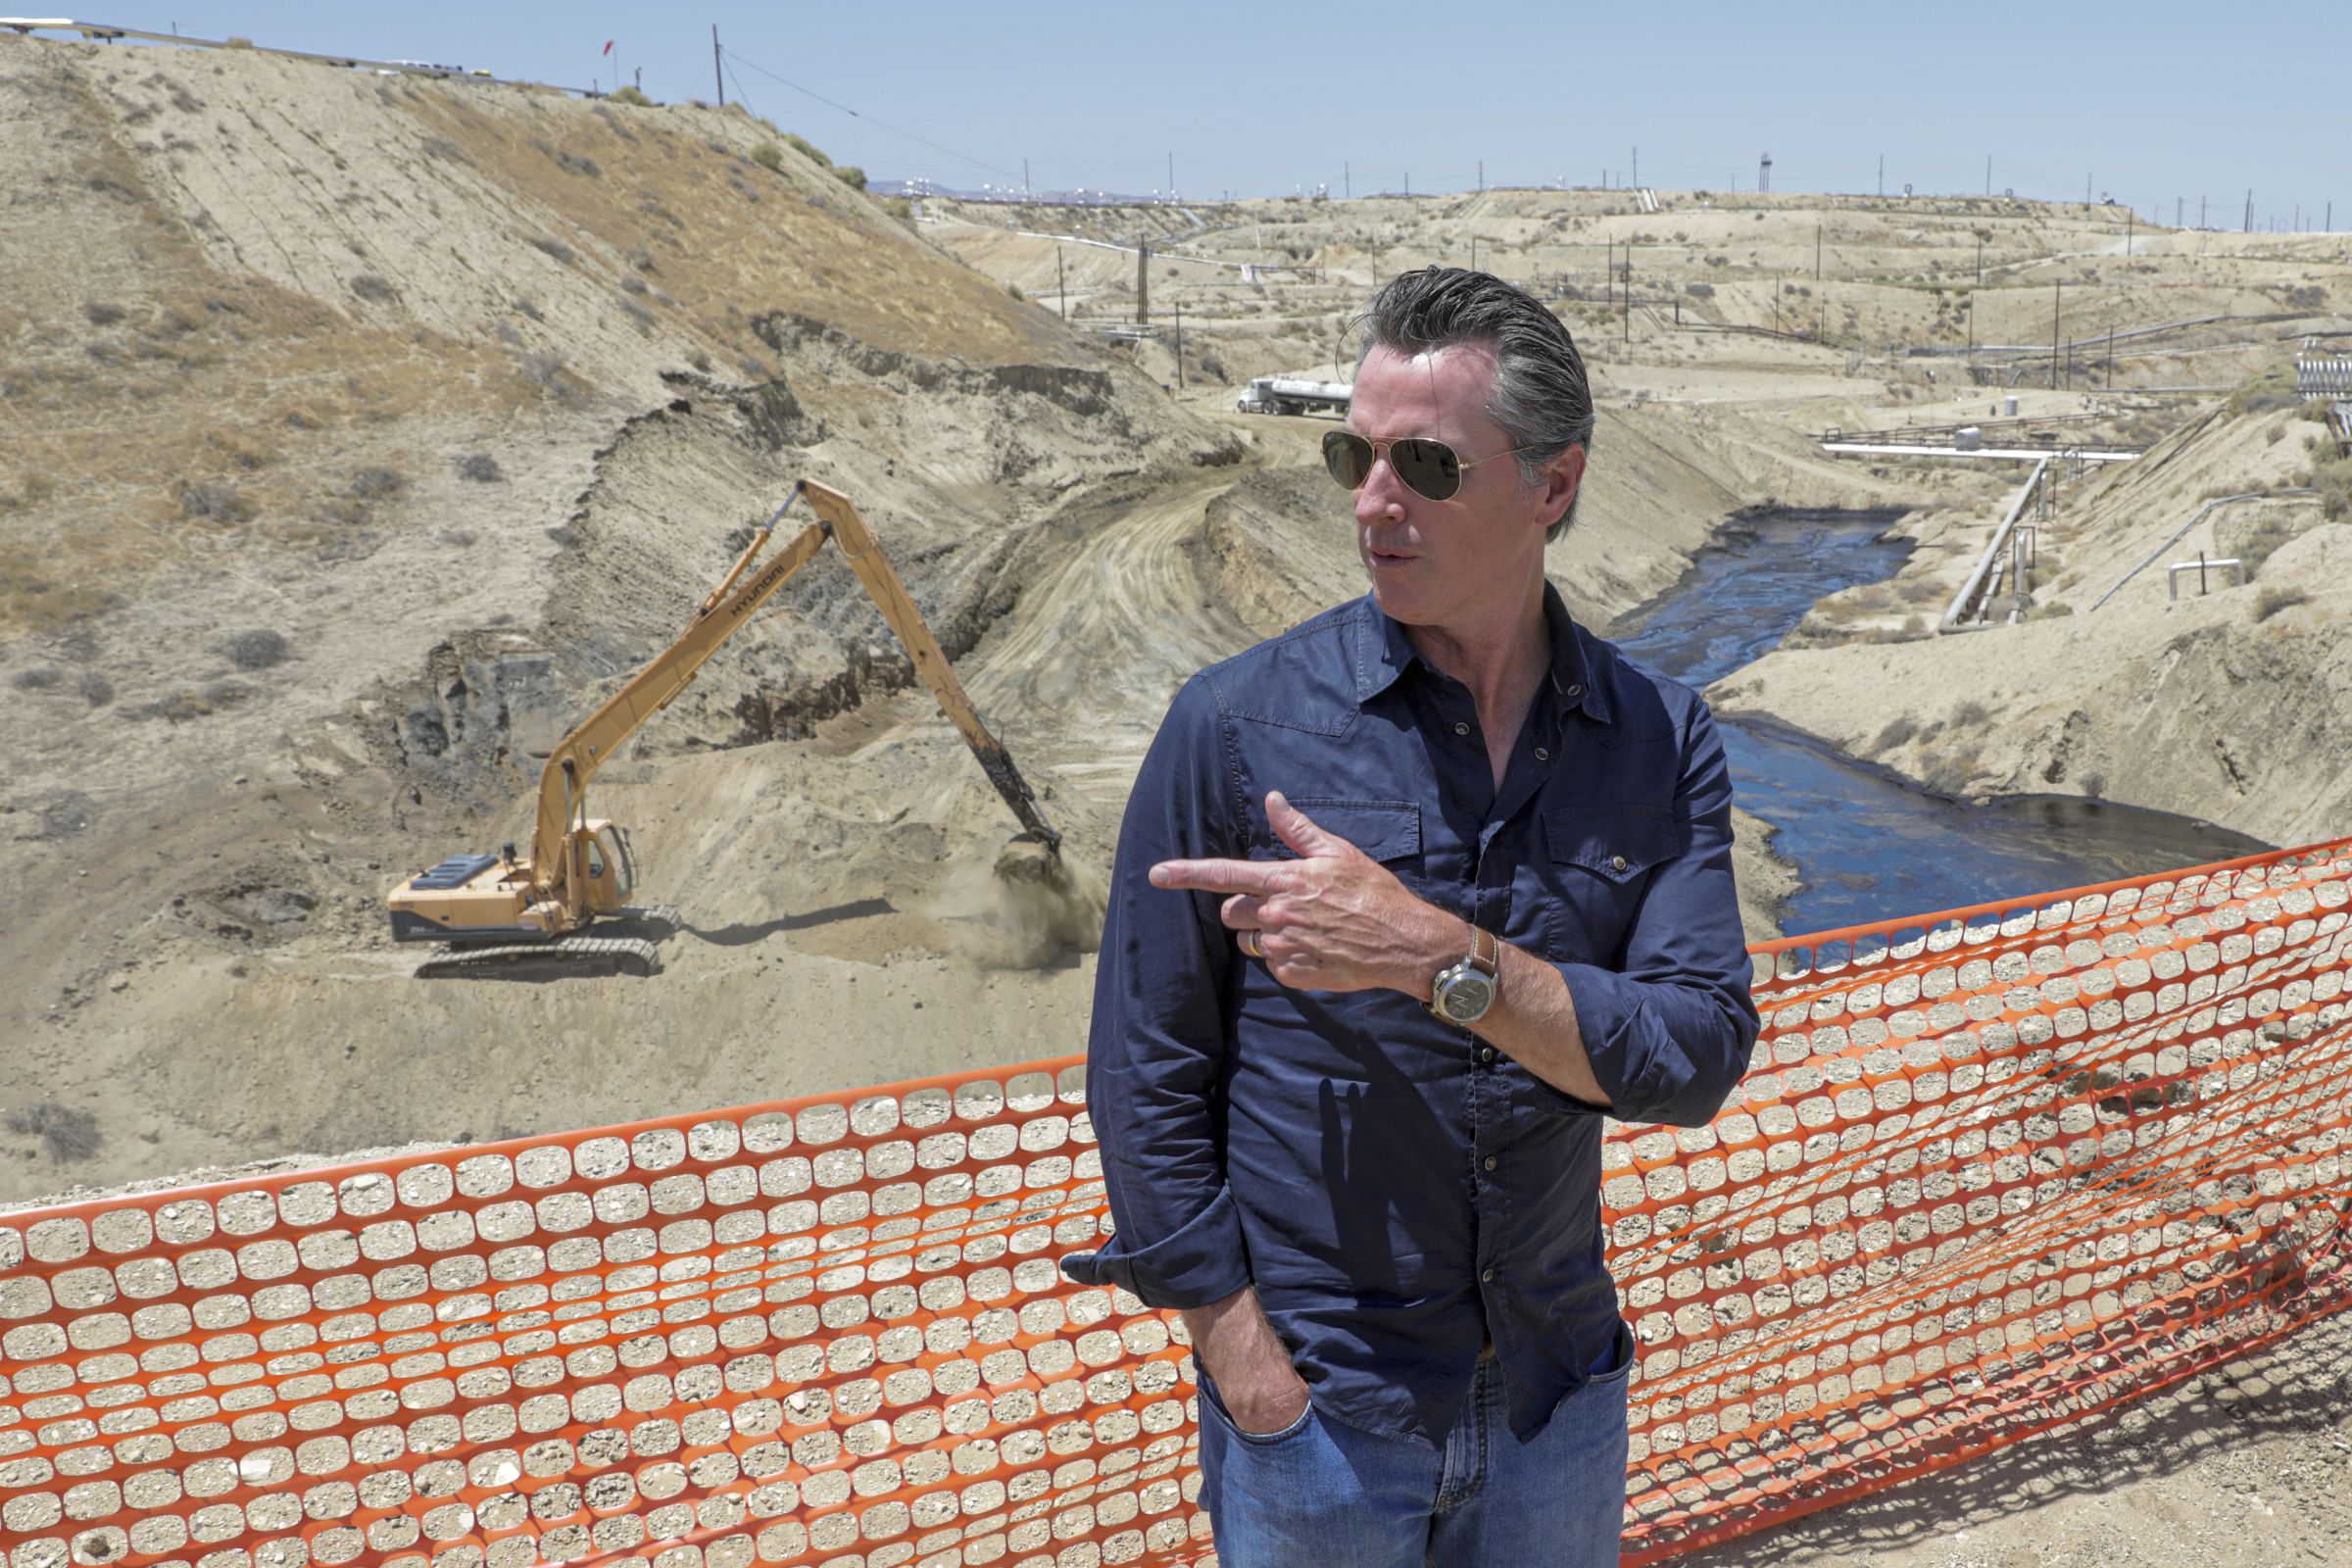 Gavin Newsom visits an oil field in California